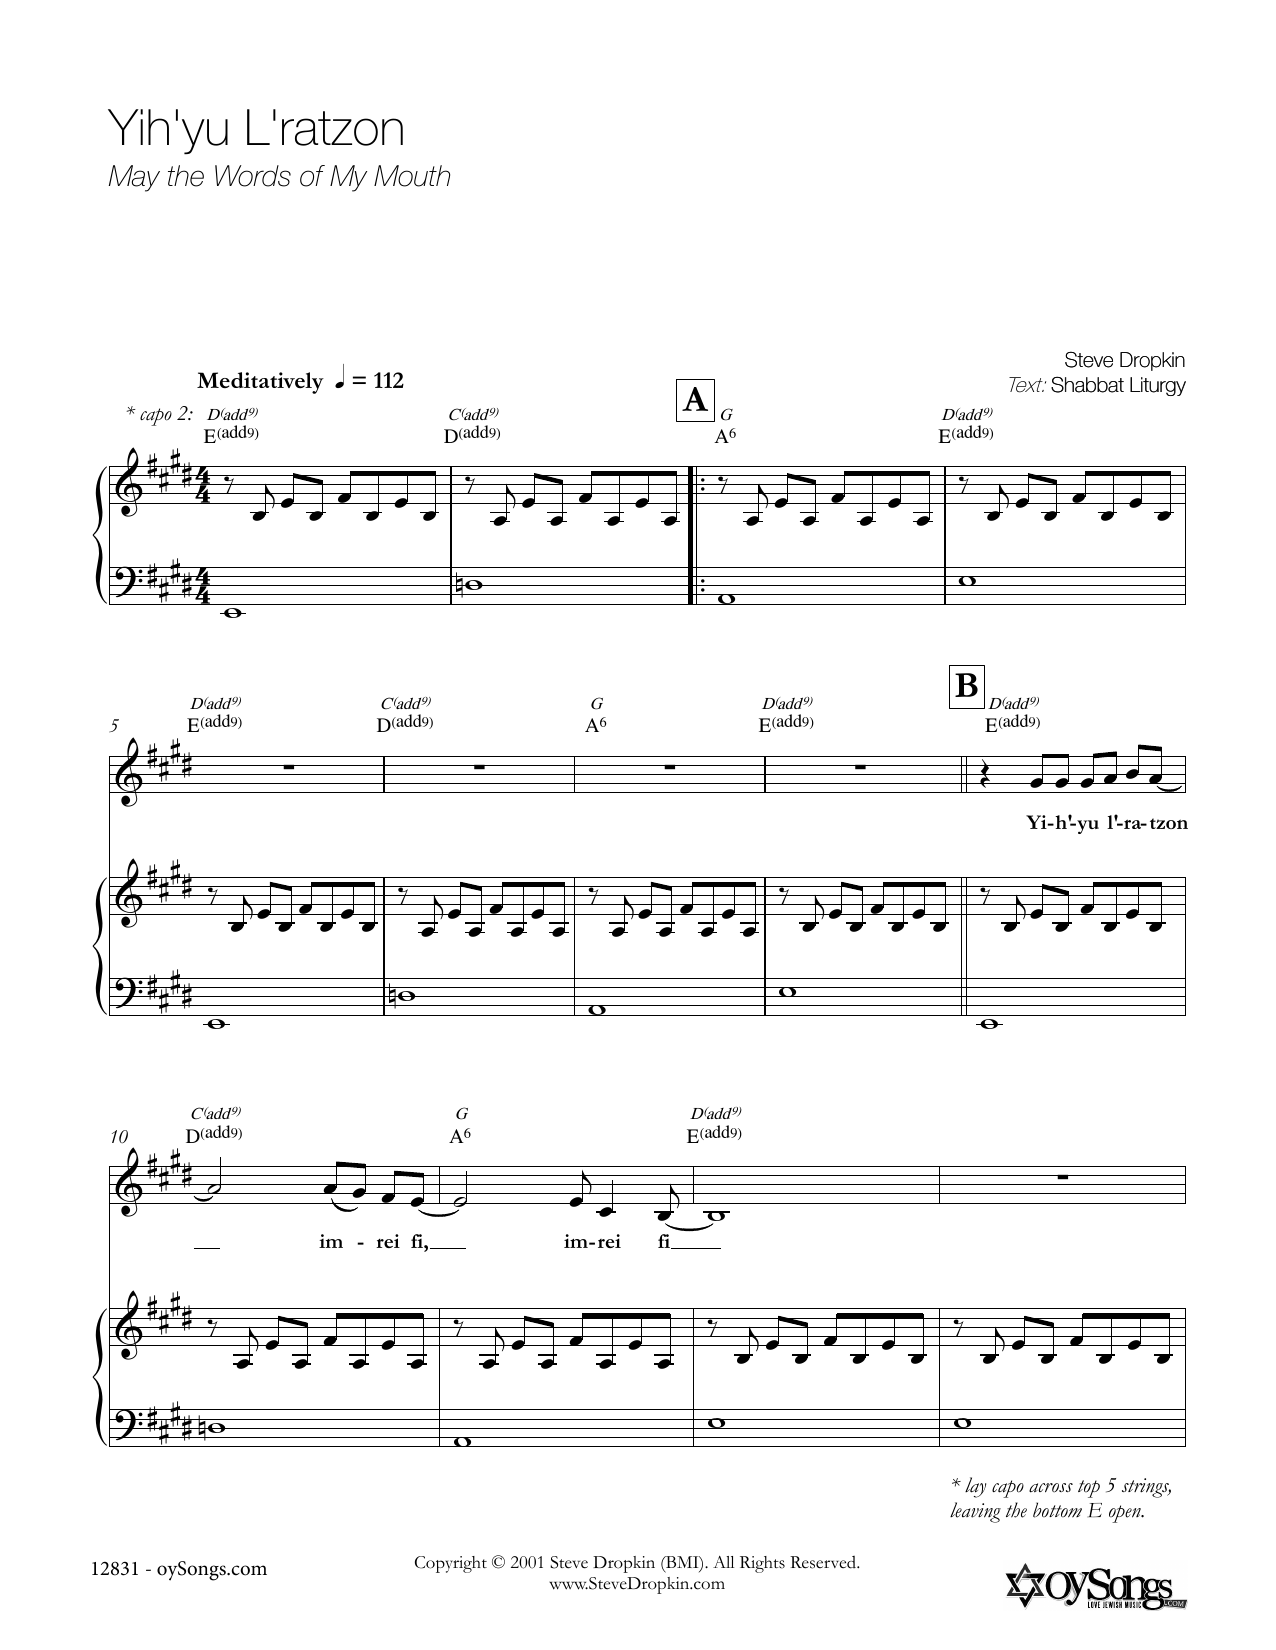 Steve Dropkin Yih'yu L'ratzon Sheet Music Notes & Chords for Melody Line, Lyrics & Chords - Download or Print PDF